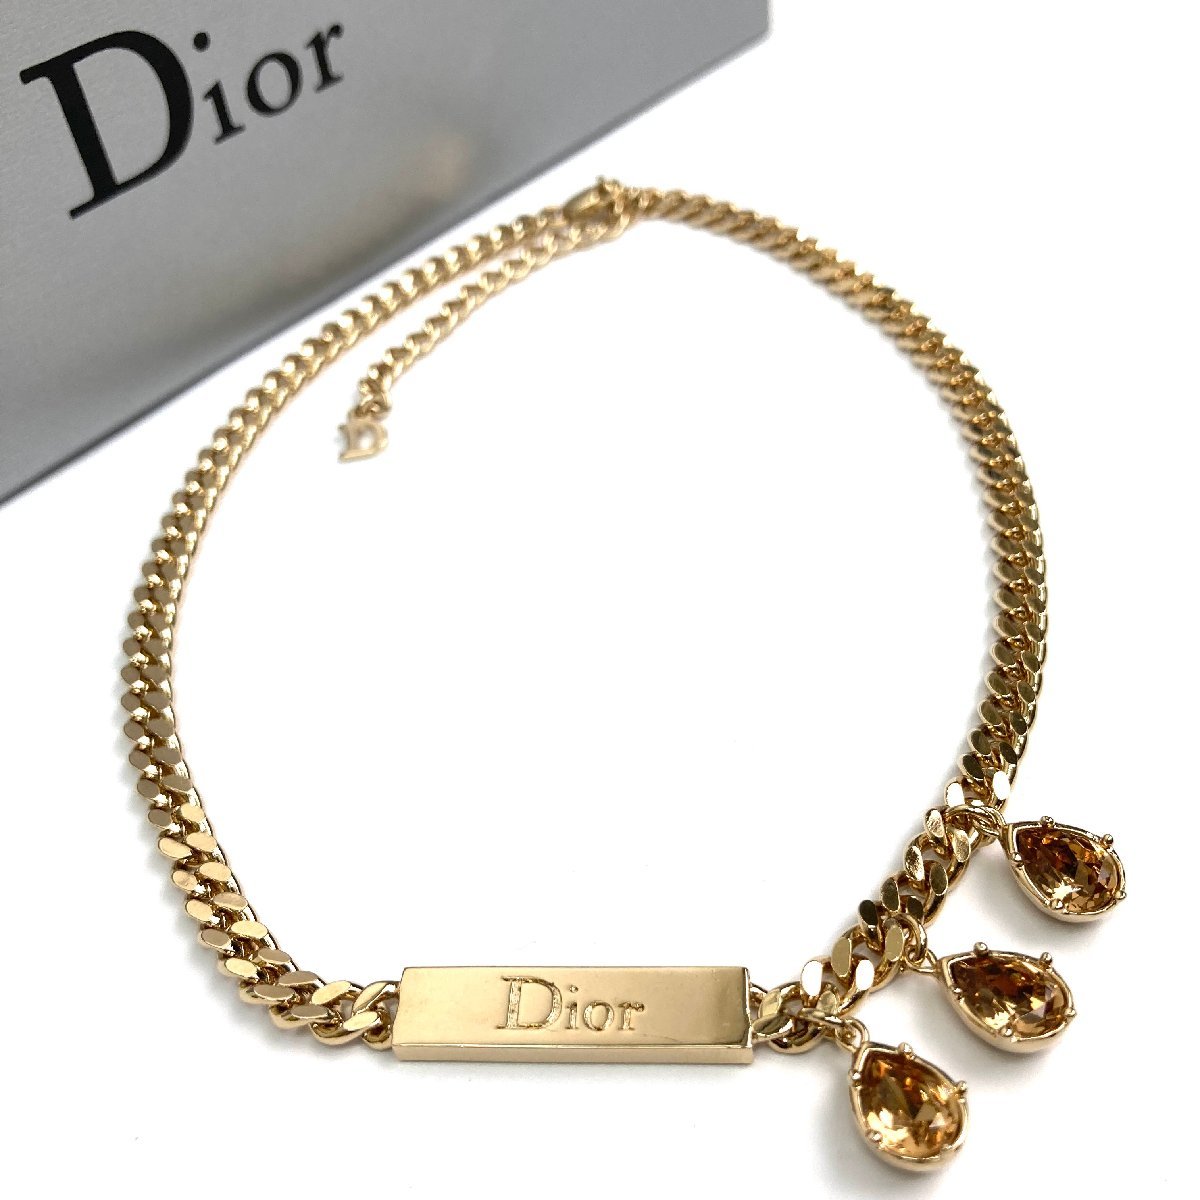 t)Dior ディオール チョーカー/喜平ネックレス ロゴプレート+ストーン